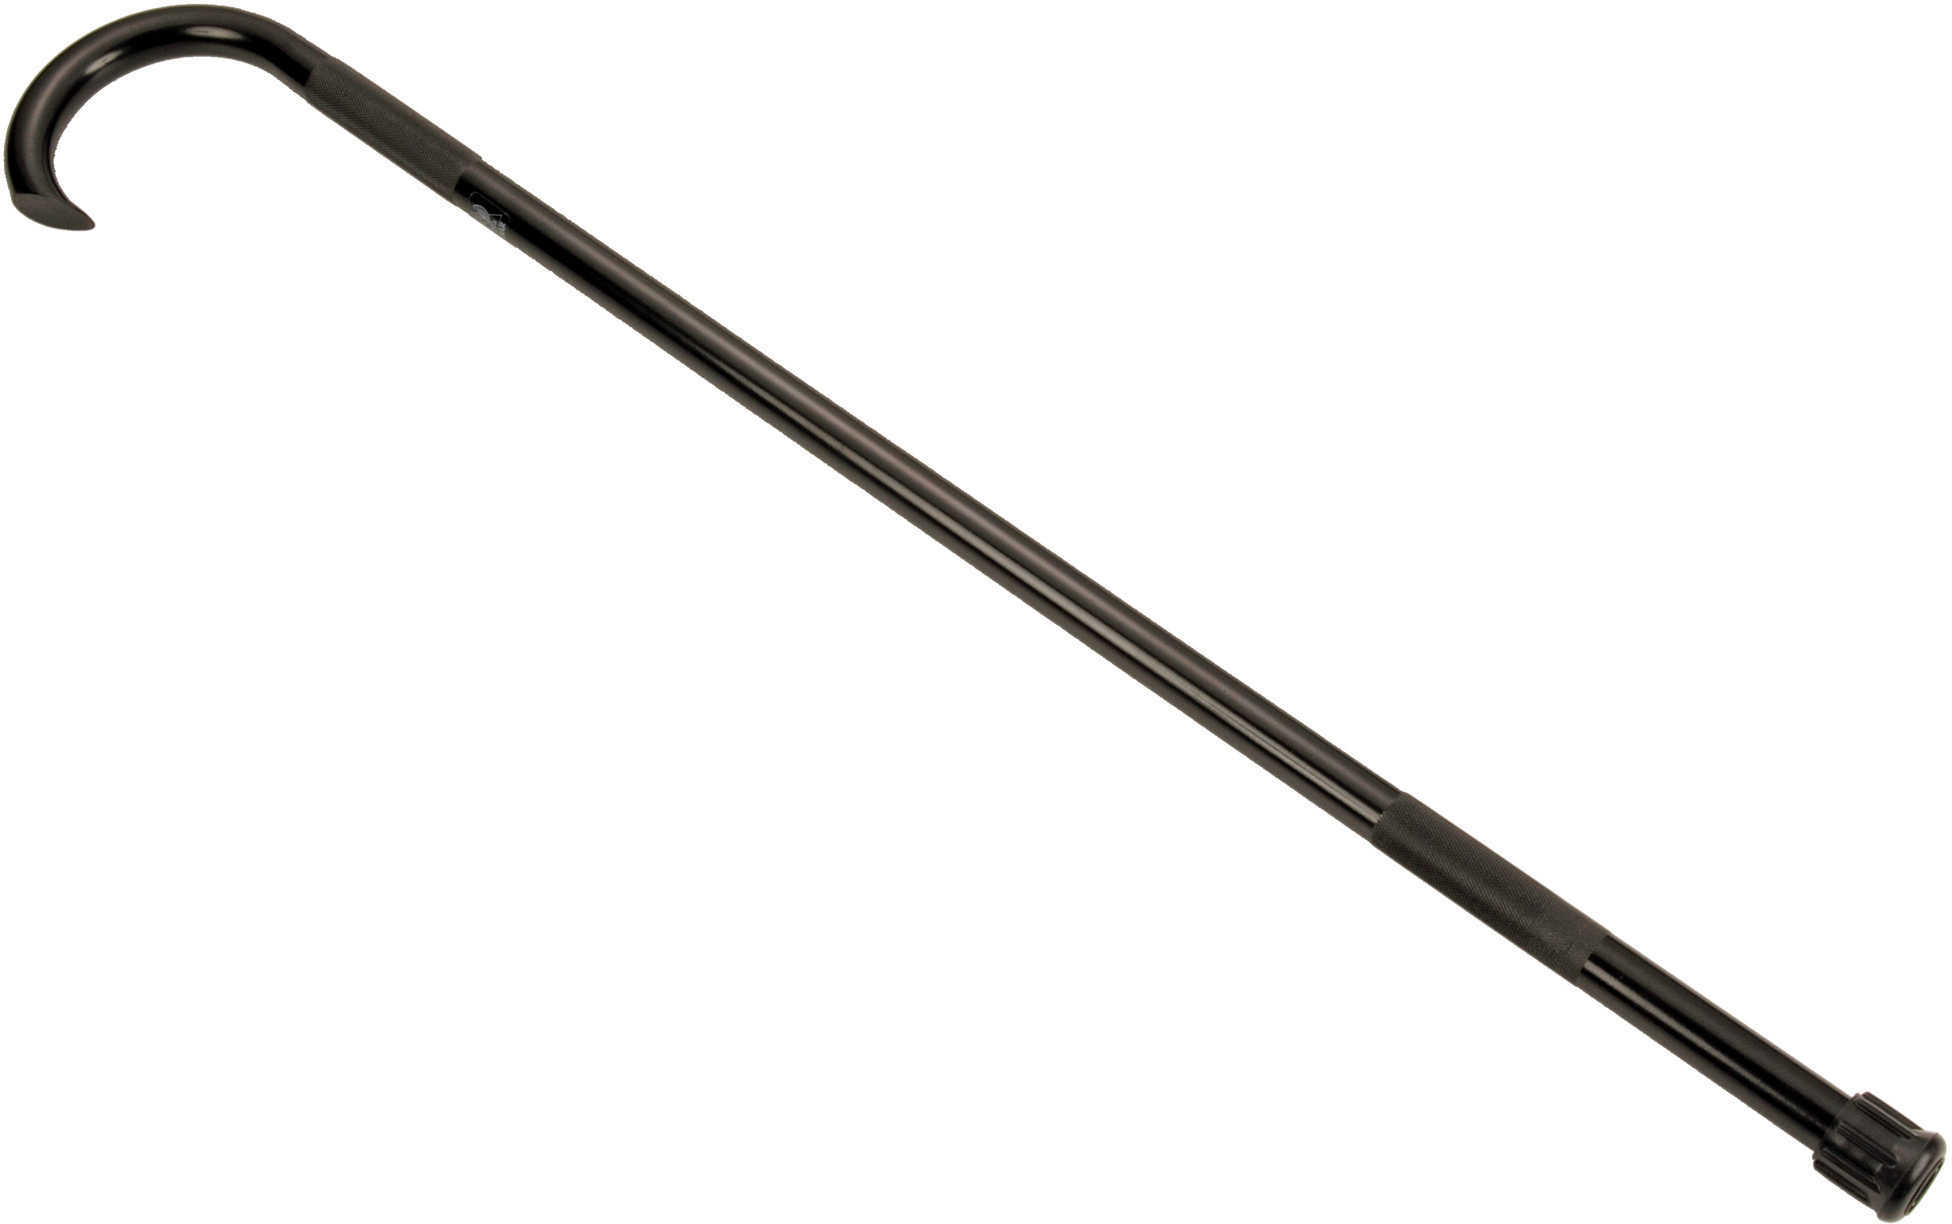 Ka-Bar Aluminum Cane-Black Md: 2-9406-8